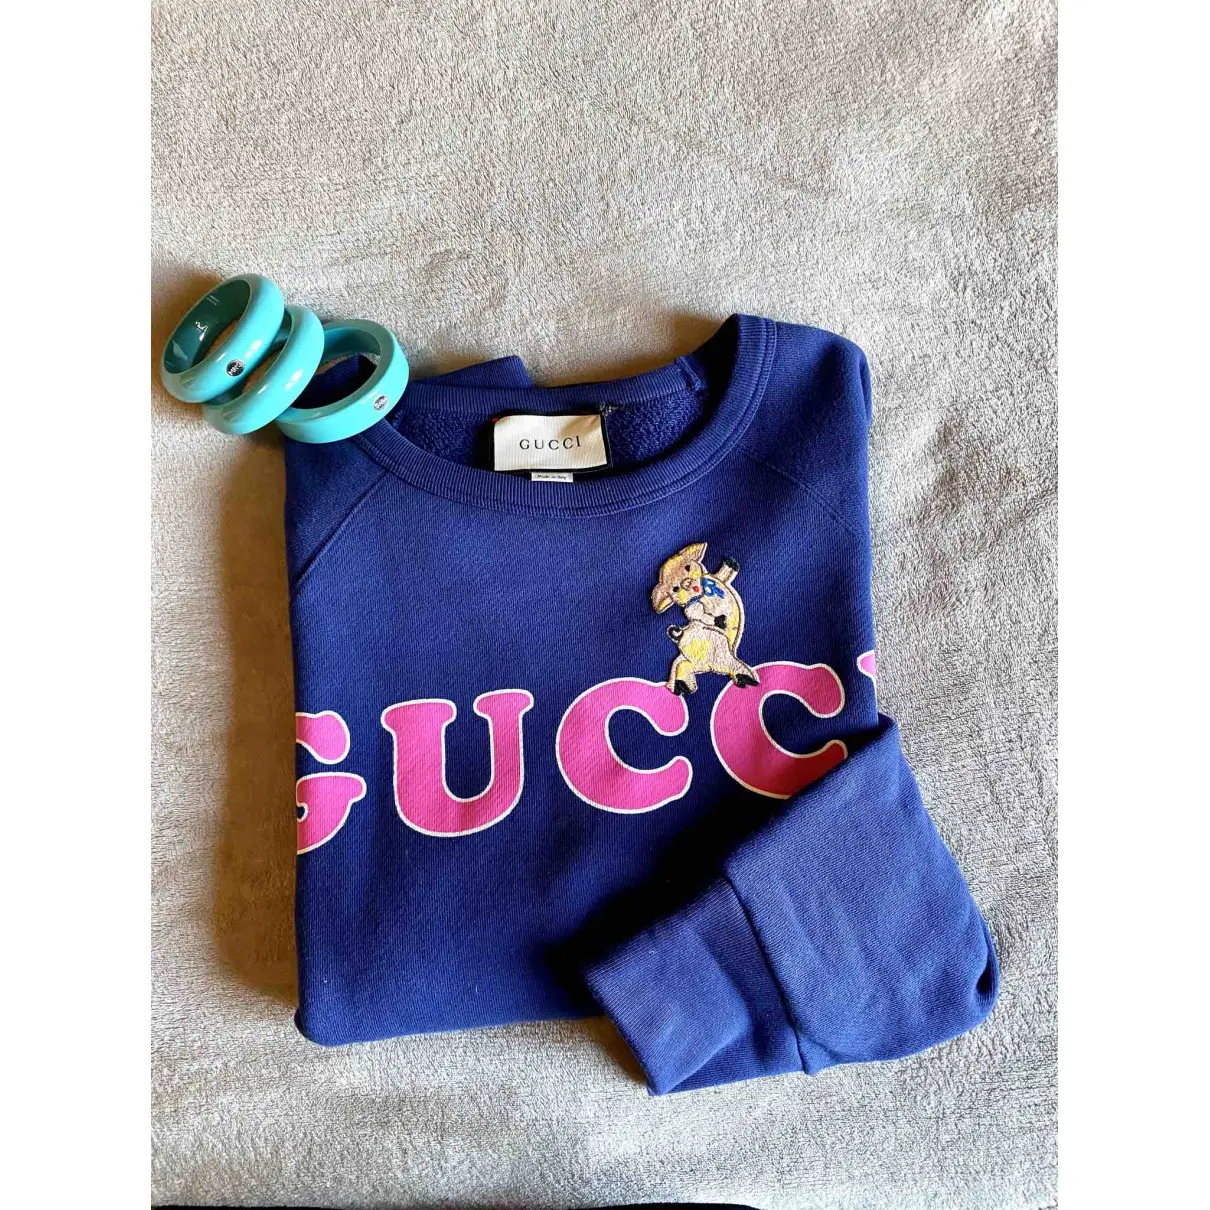 Buy Gucci Blue Cotton Knitwear online